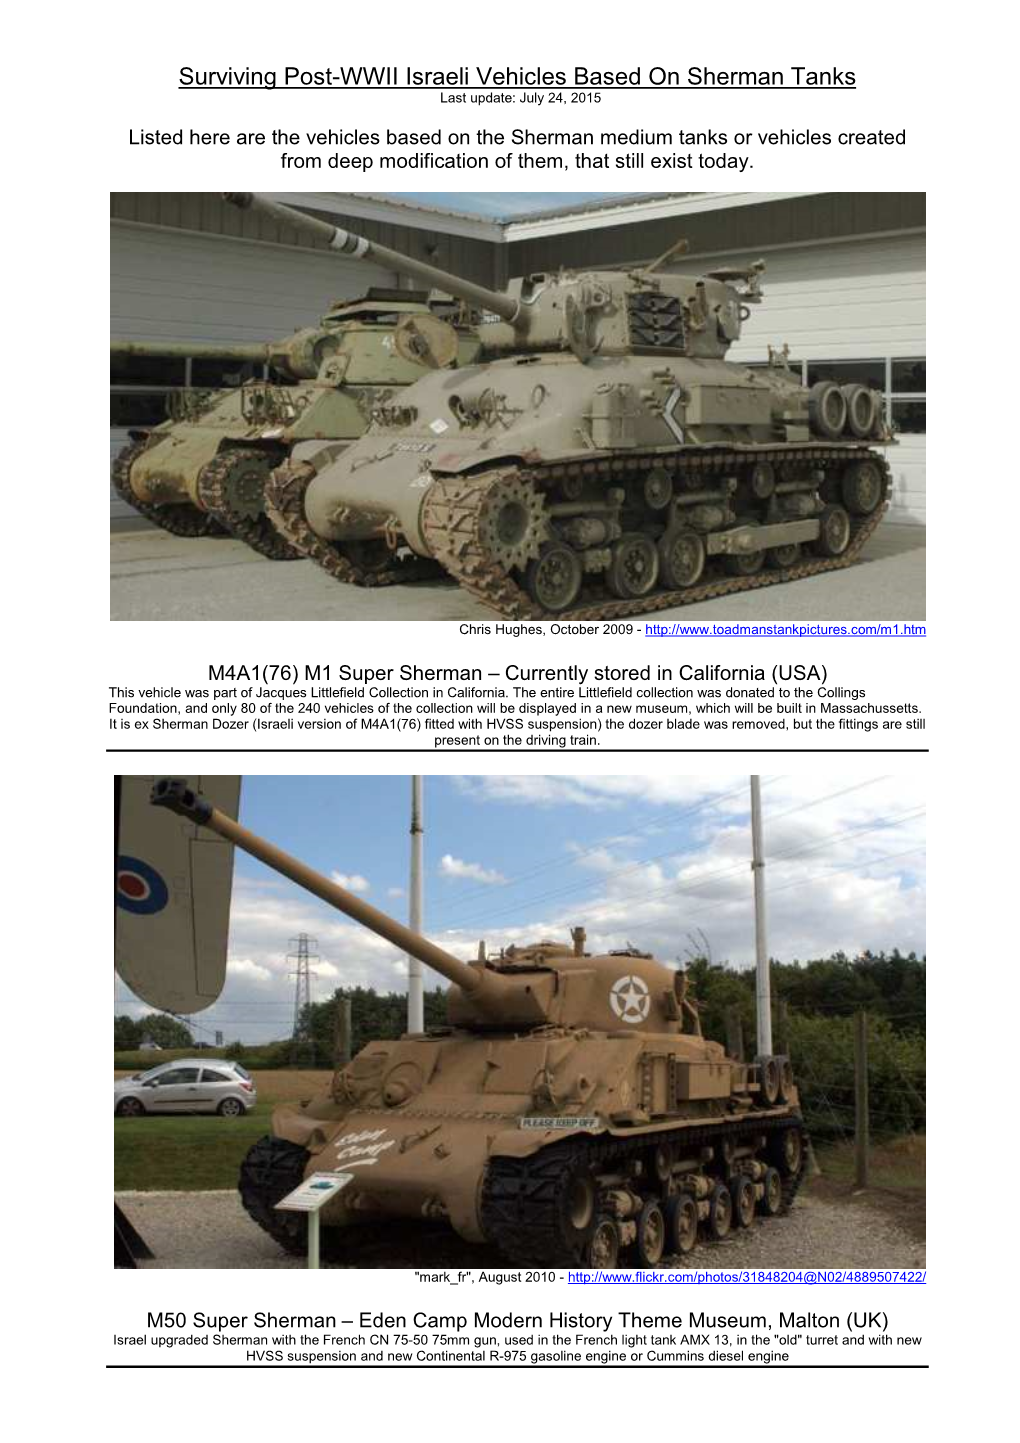 Surviving Post-WWII Israeli Vehicles Based on Sherman Tanks Last Update: July 24, 2015